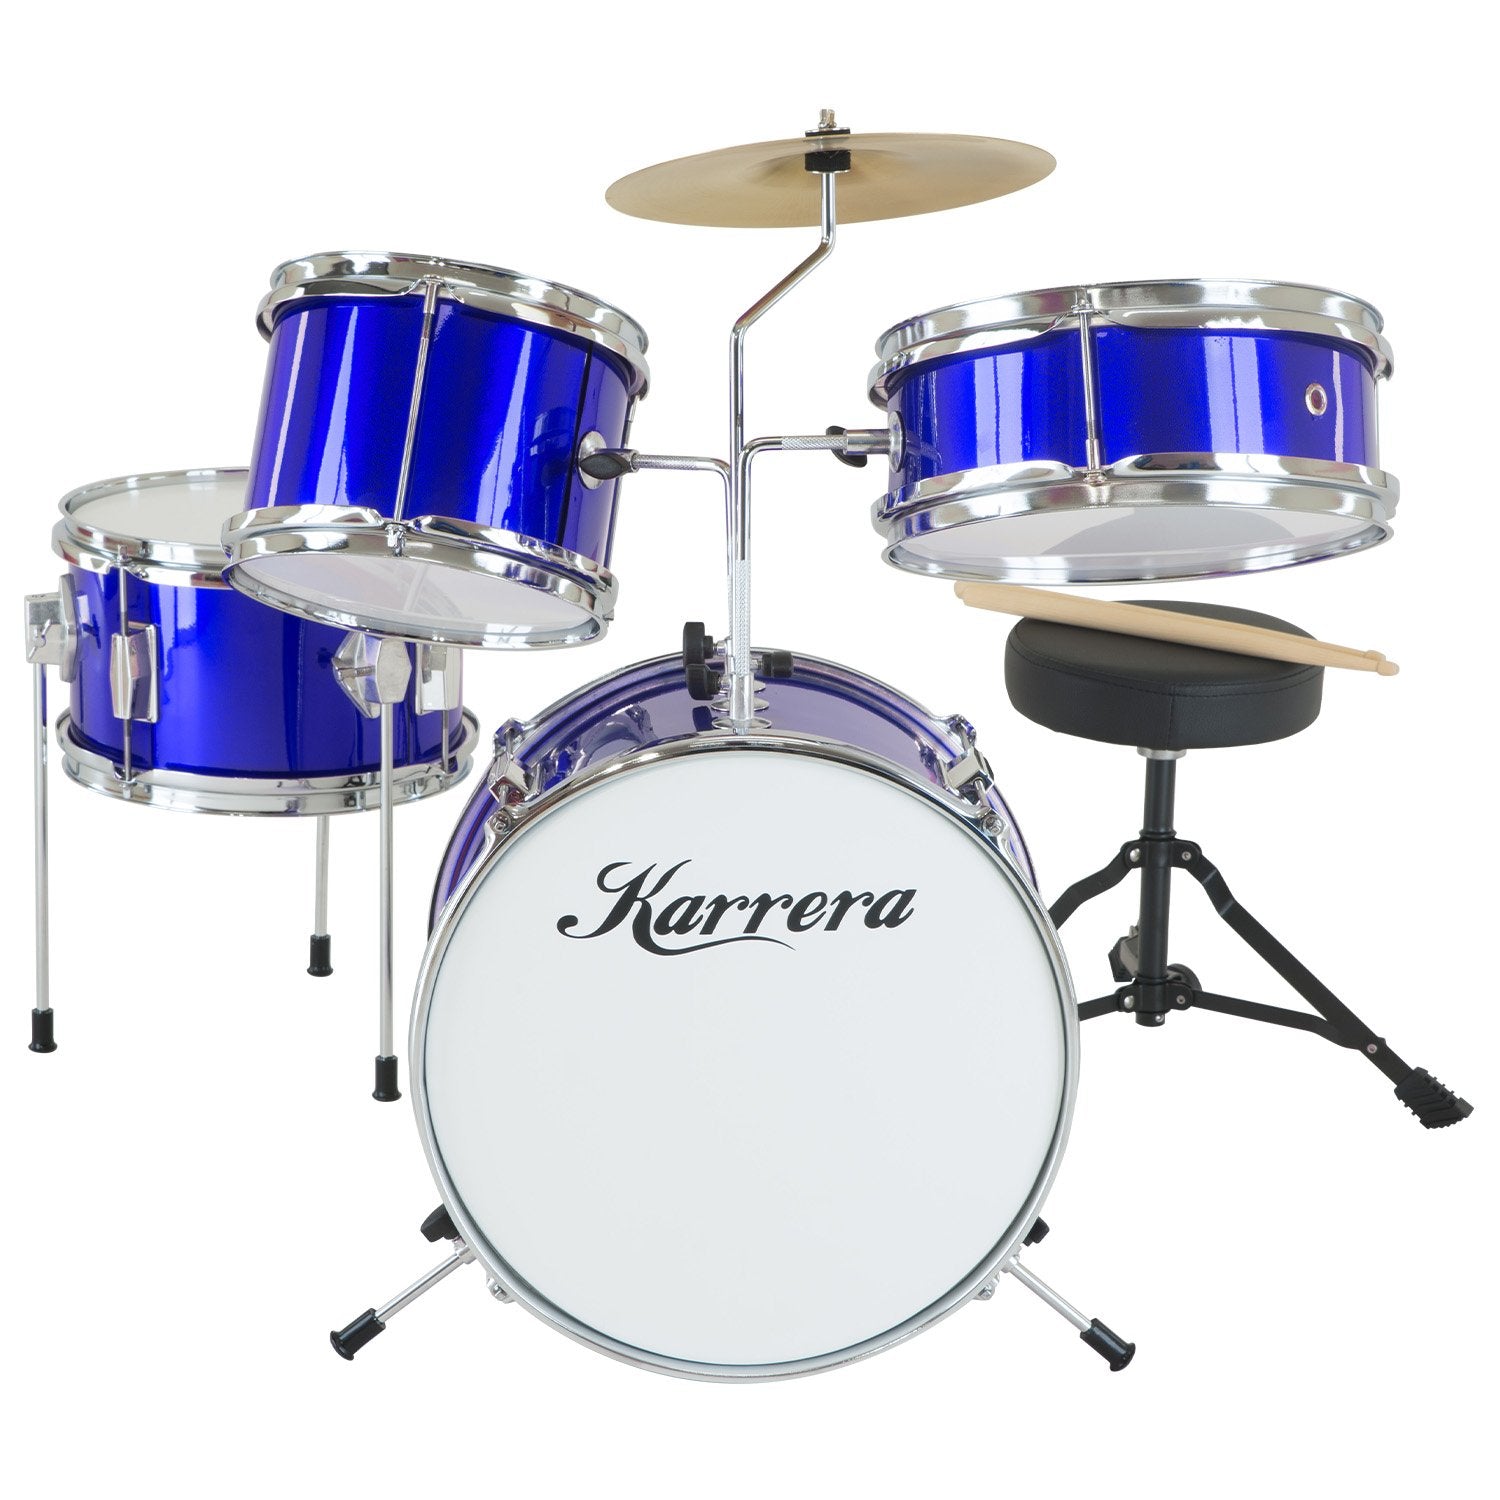 Karrera Children's 4pc Drum Kit - Blue - SILBERSHELL